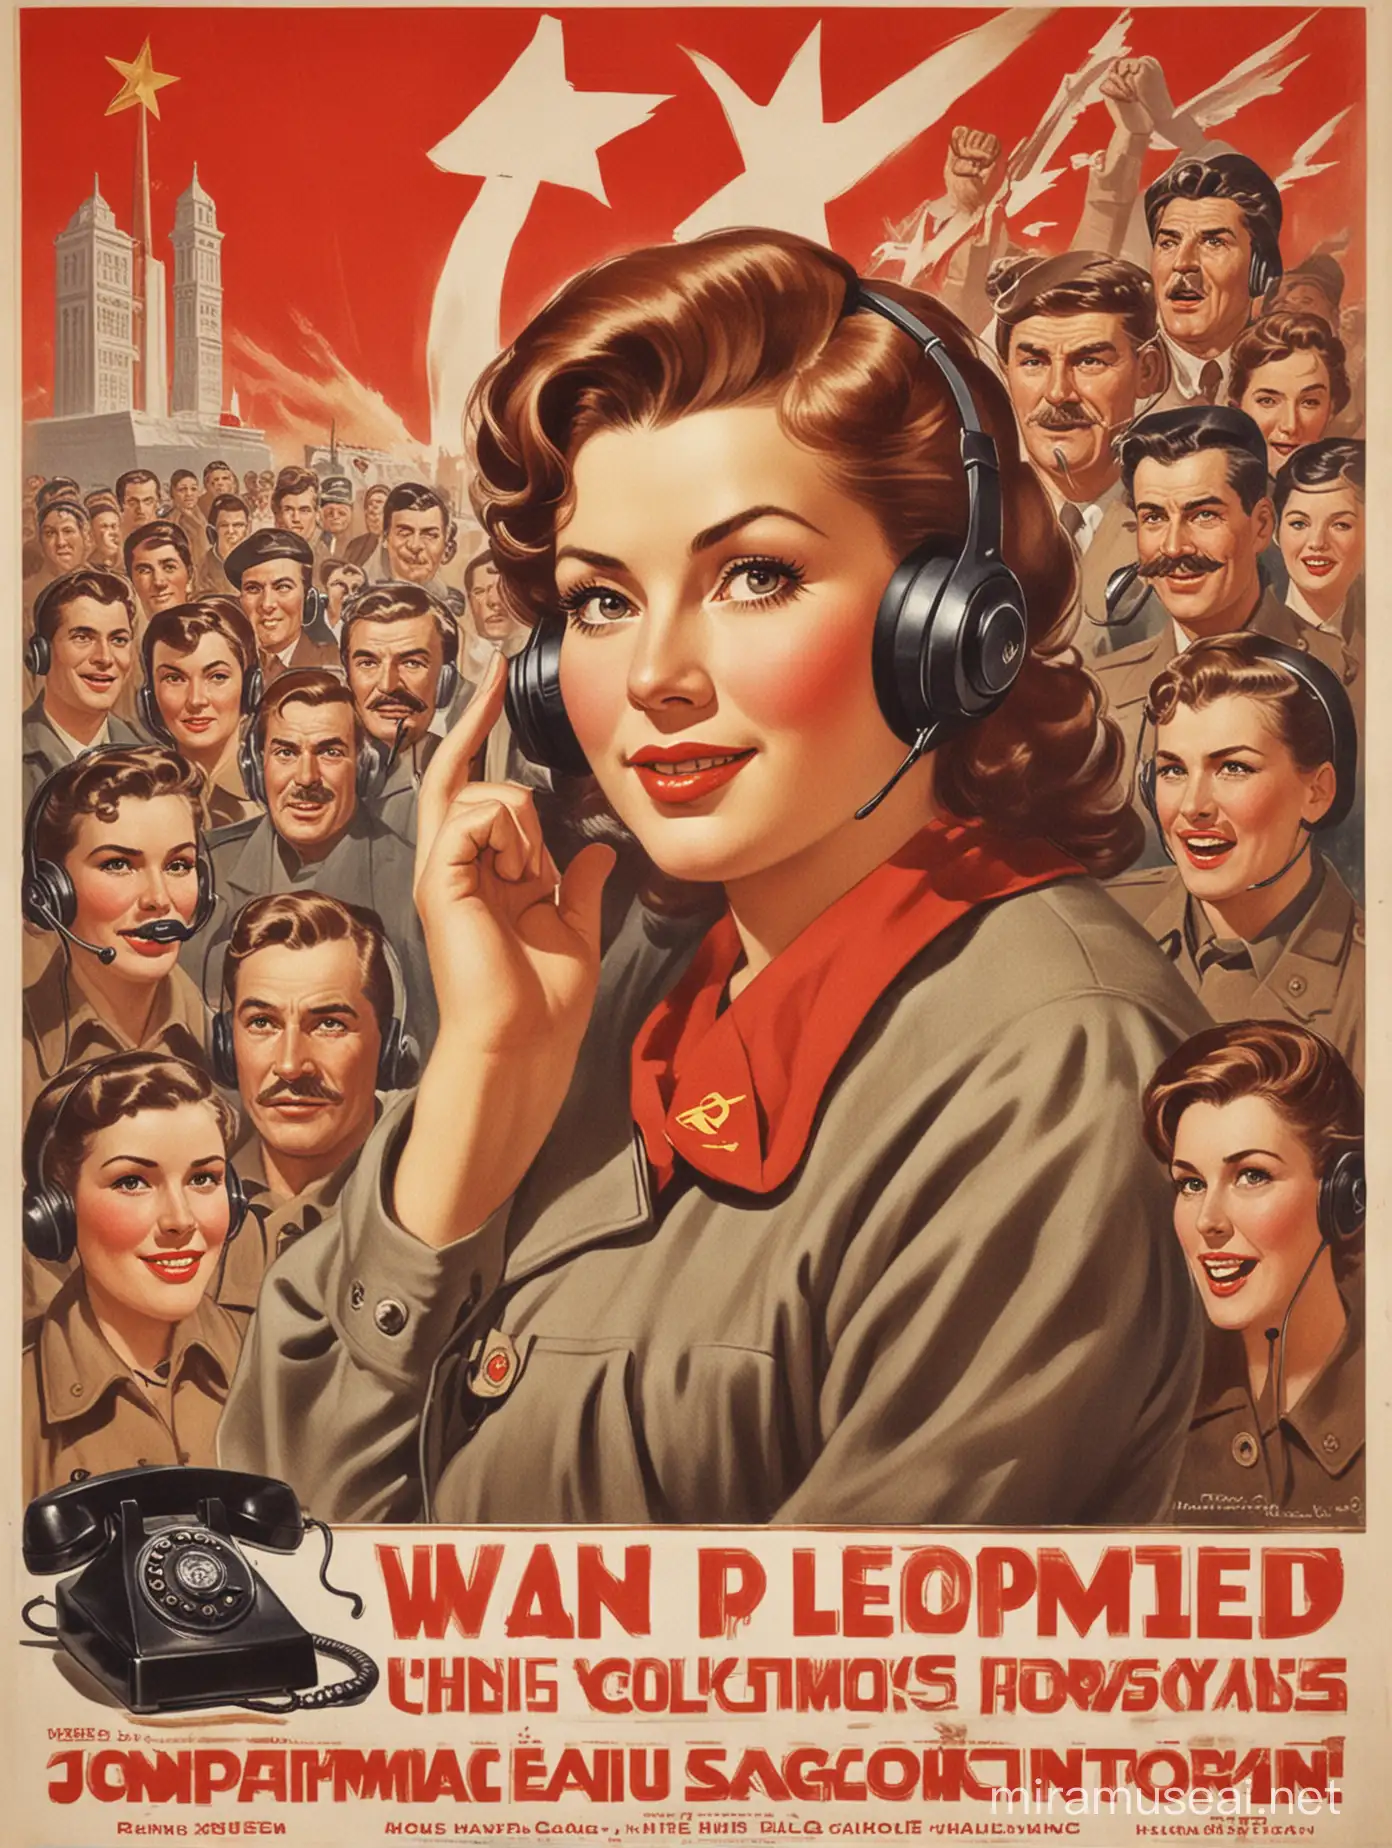 Communist propaganda poster about customer calls